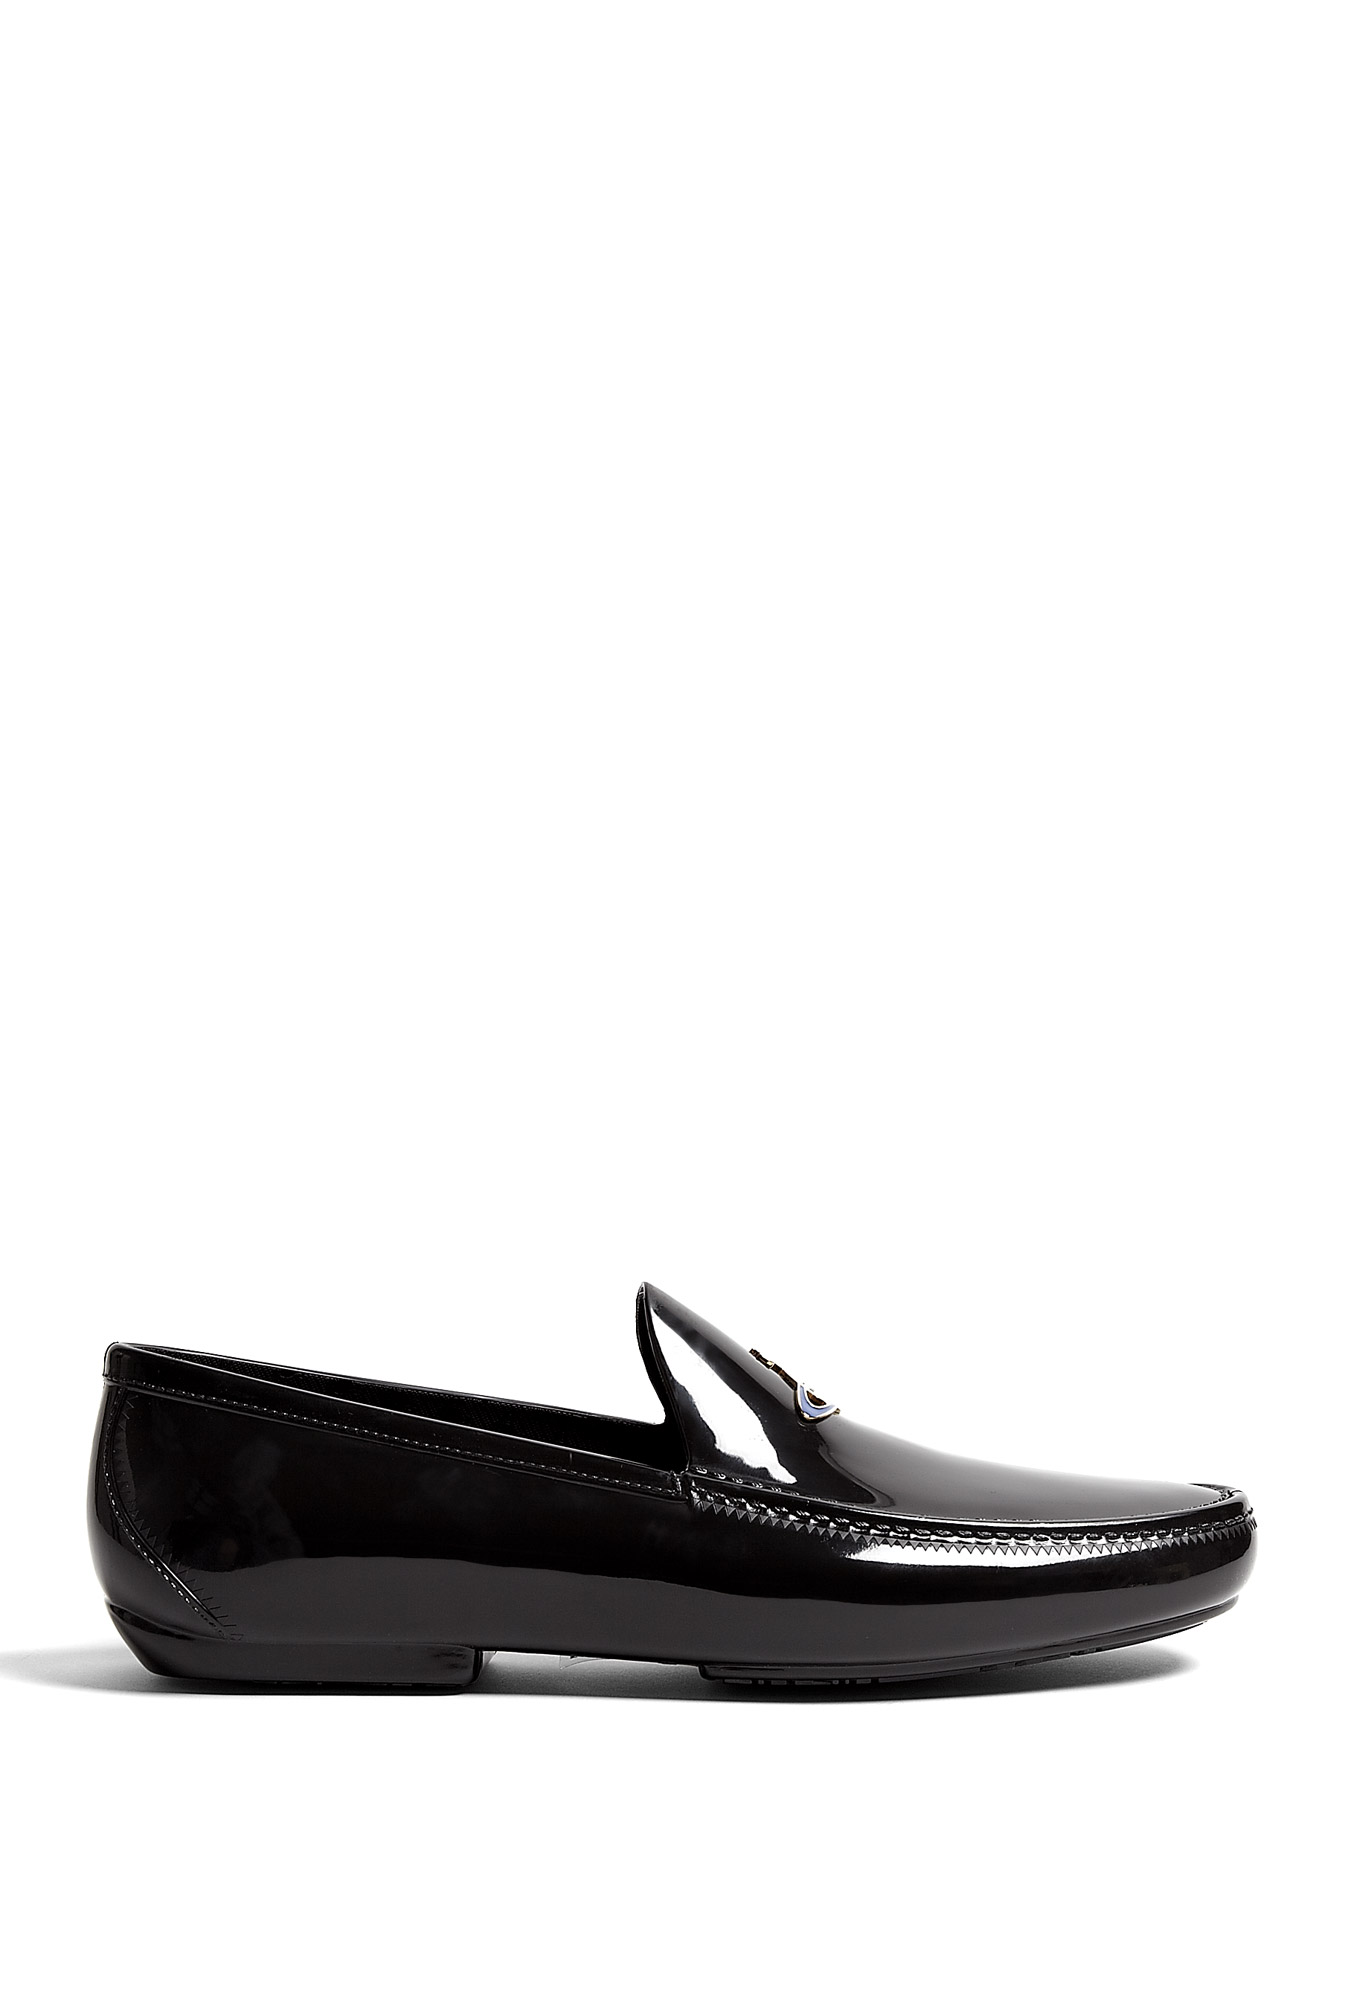 Vivienne Westwood Black Orb Plastic Loafers in Black for Men | Lyst